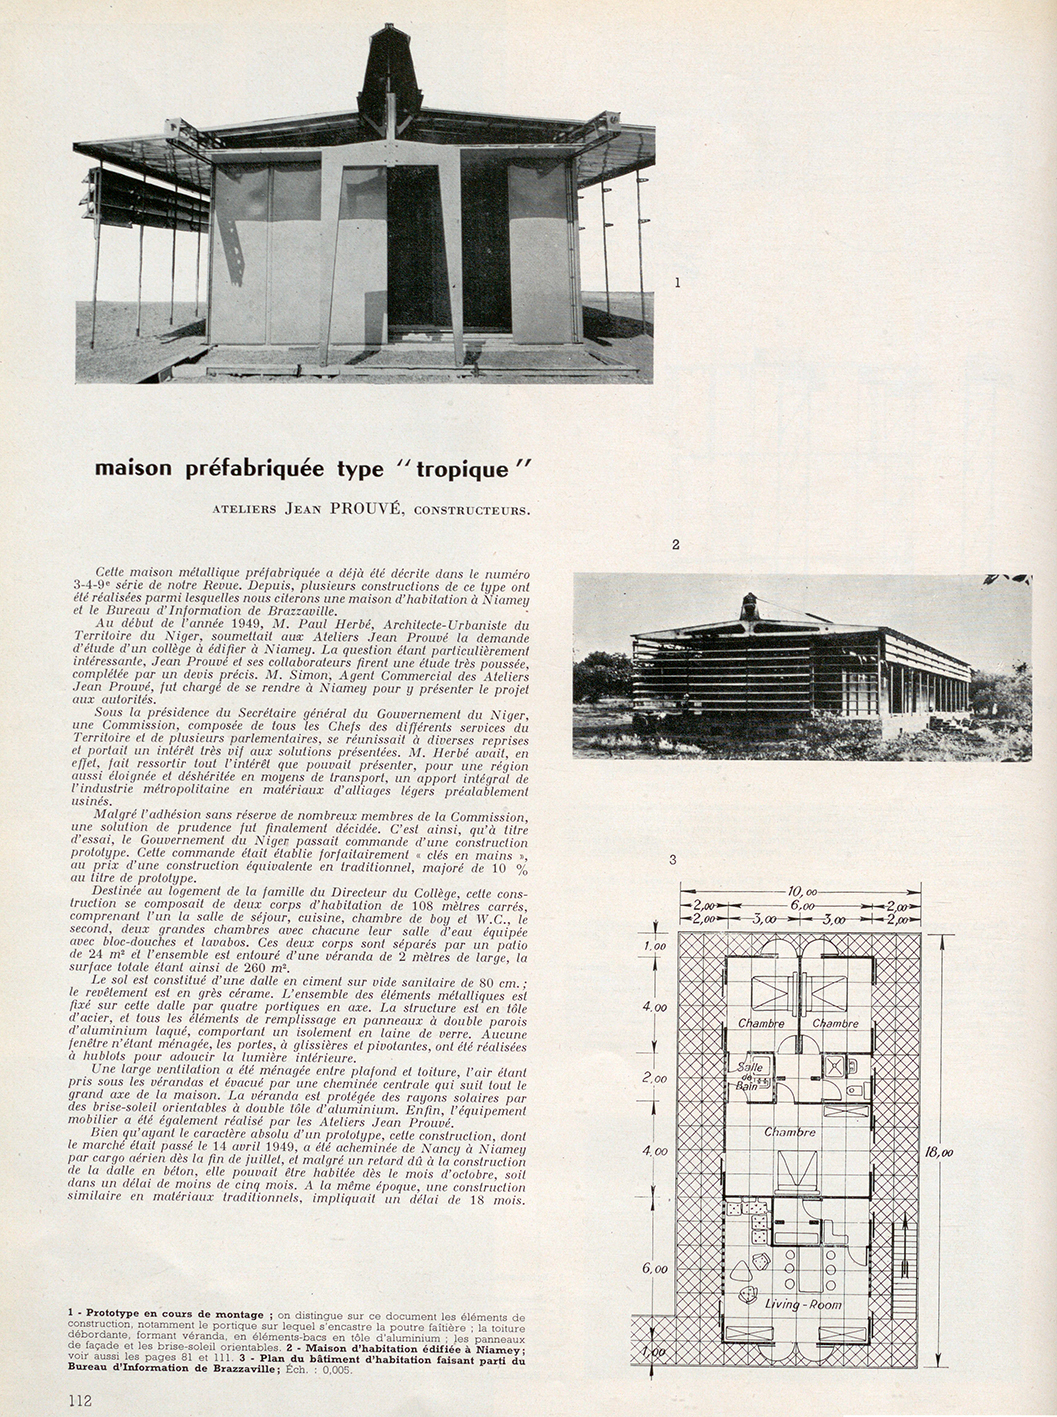 Prototype of the Tropique house, 1949 (Henri Prouvé, arch.) in <i>Techniques & Architecture,</i> no. 5-6, 1952.